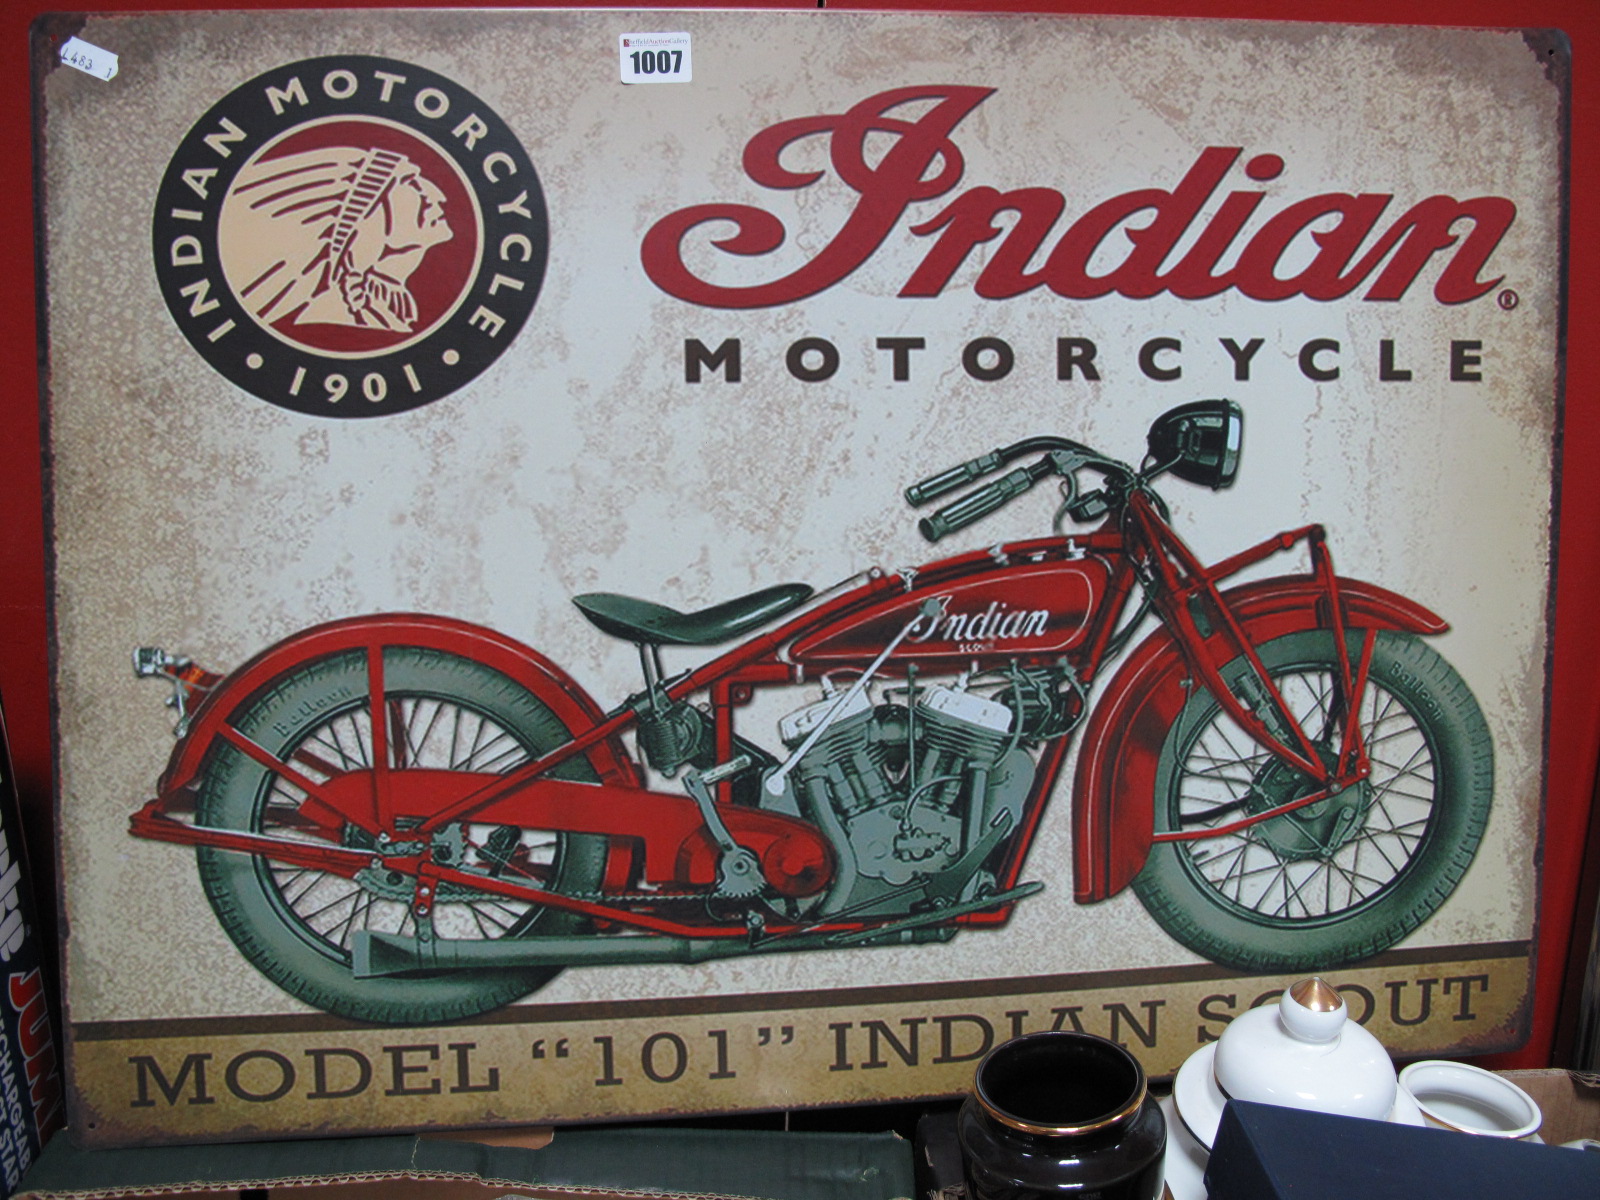 An Indian Motorcycle Metal Sign, 50 x 70cm.